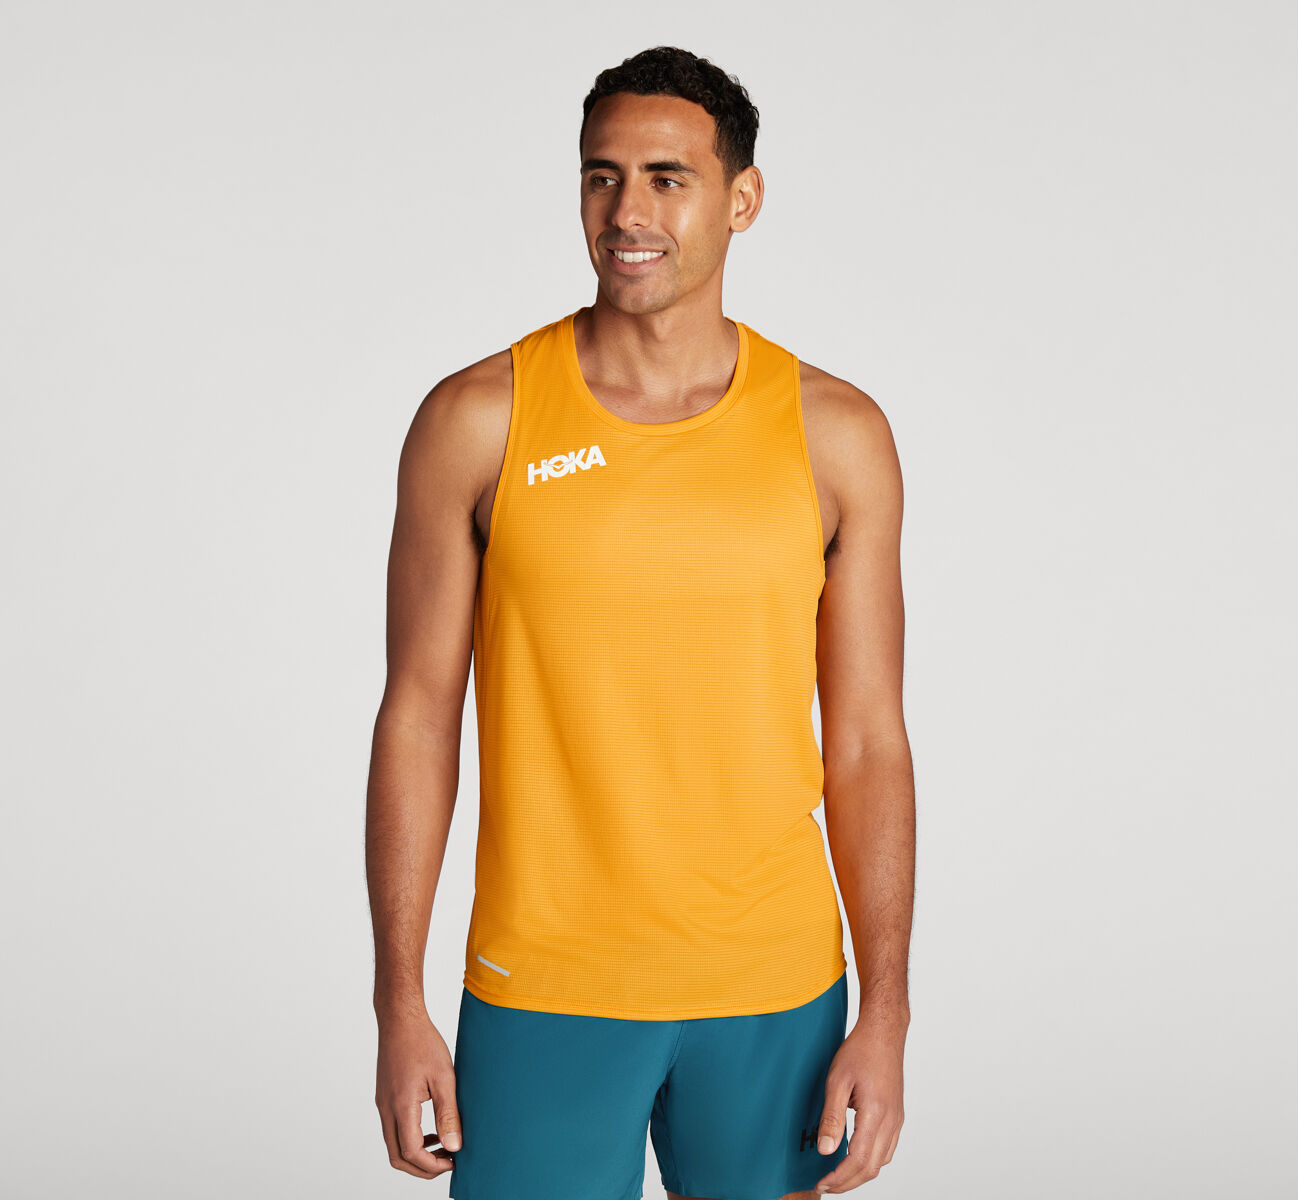 Hoka One One Running Gear Orange Logo NWOT Jersey Men's Top Shirt Small 